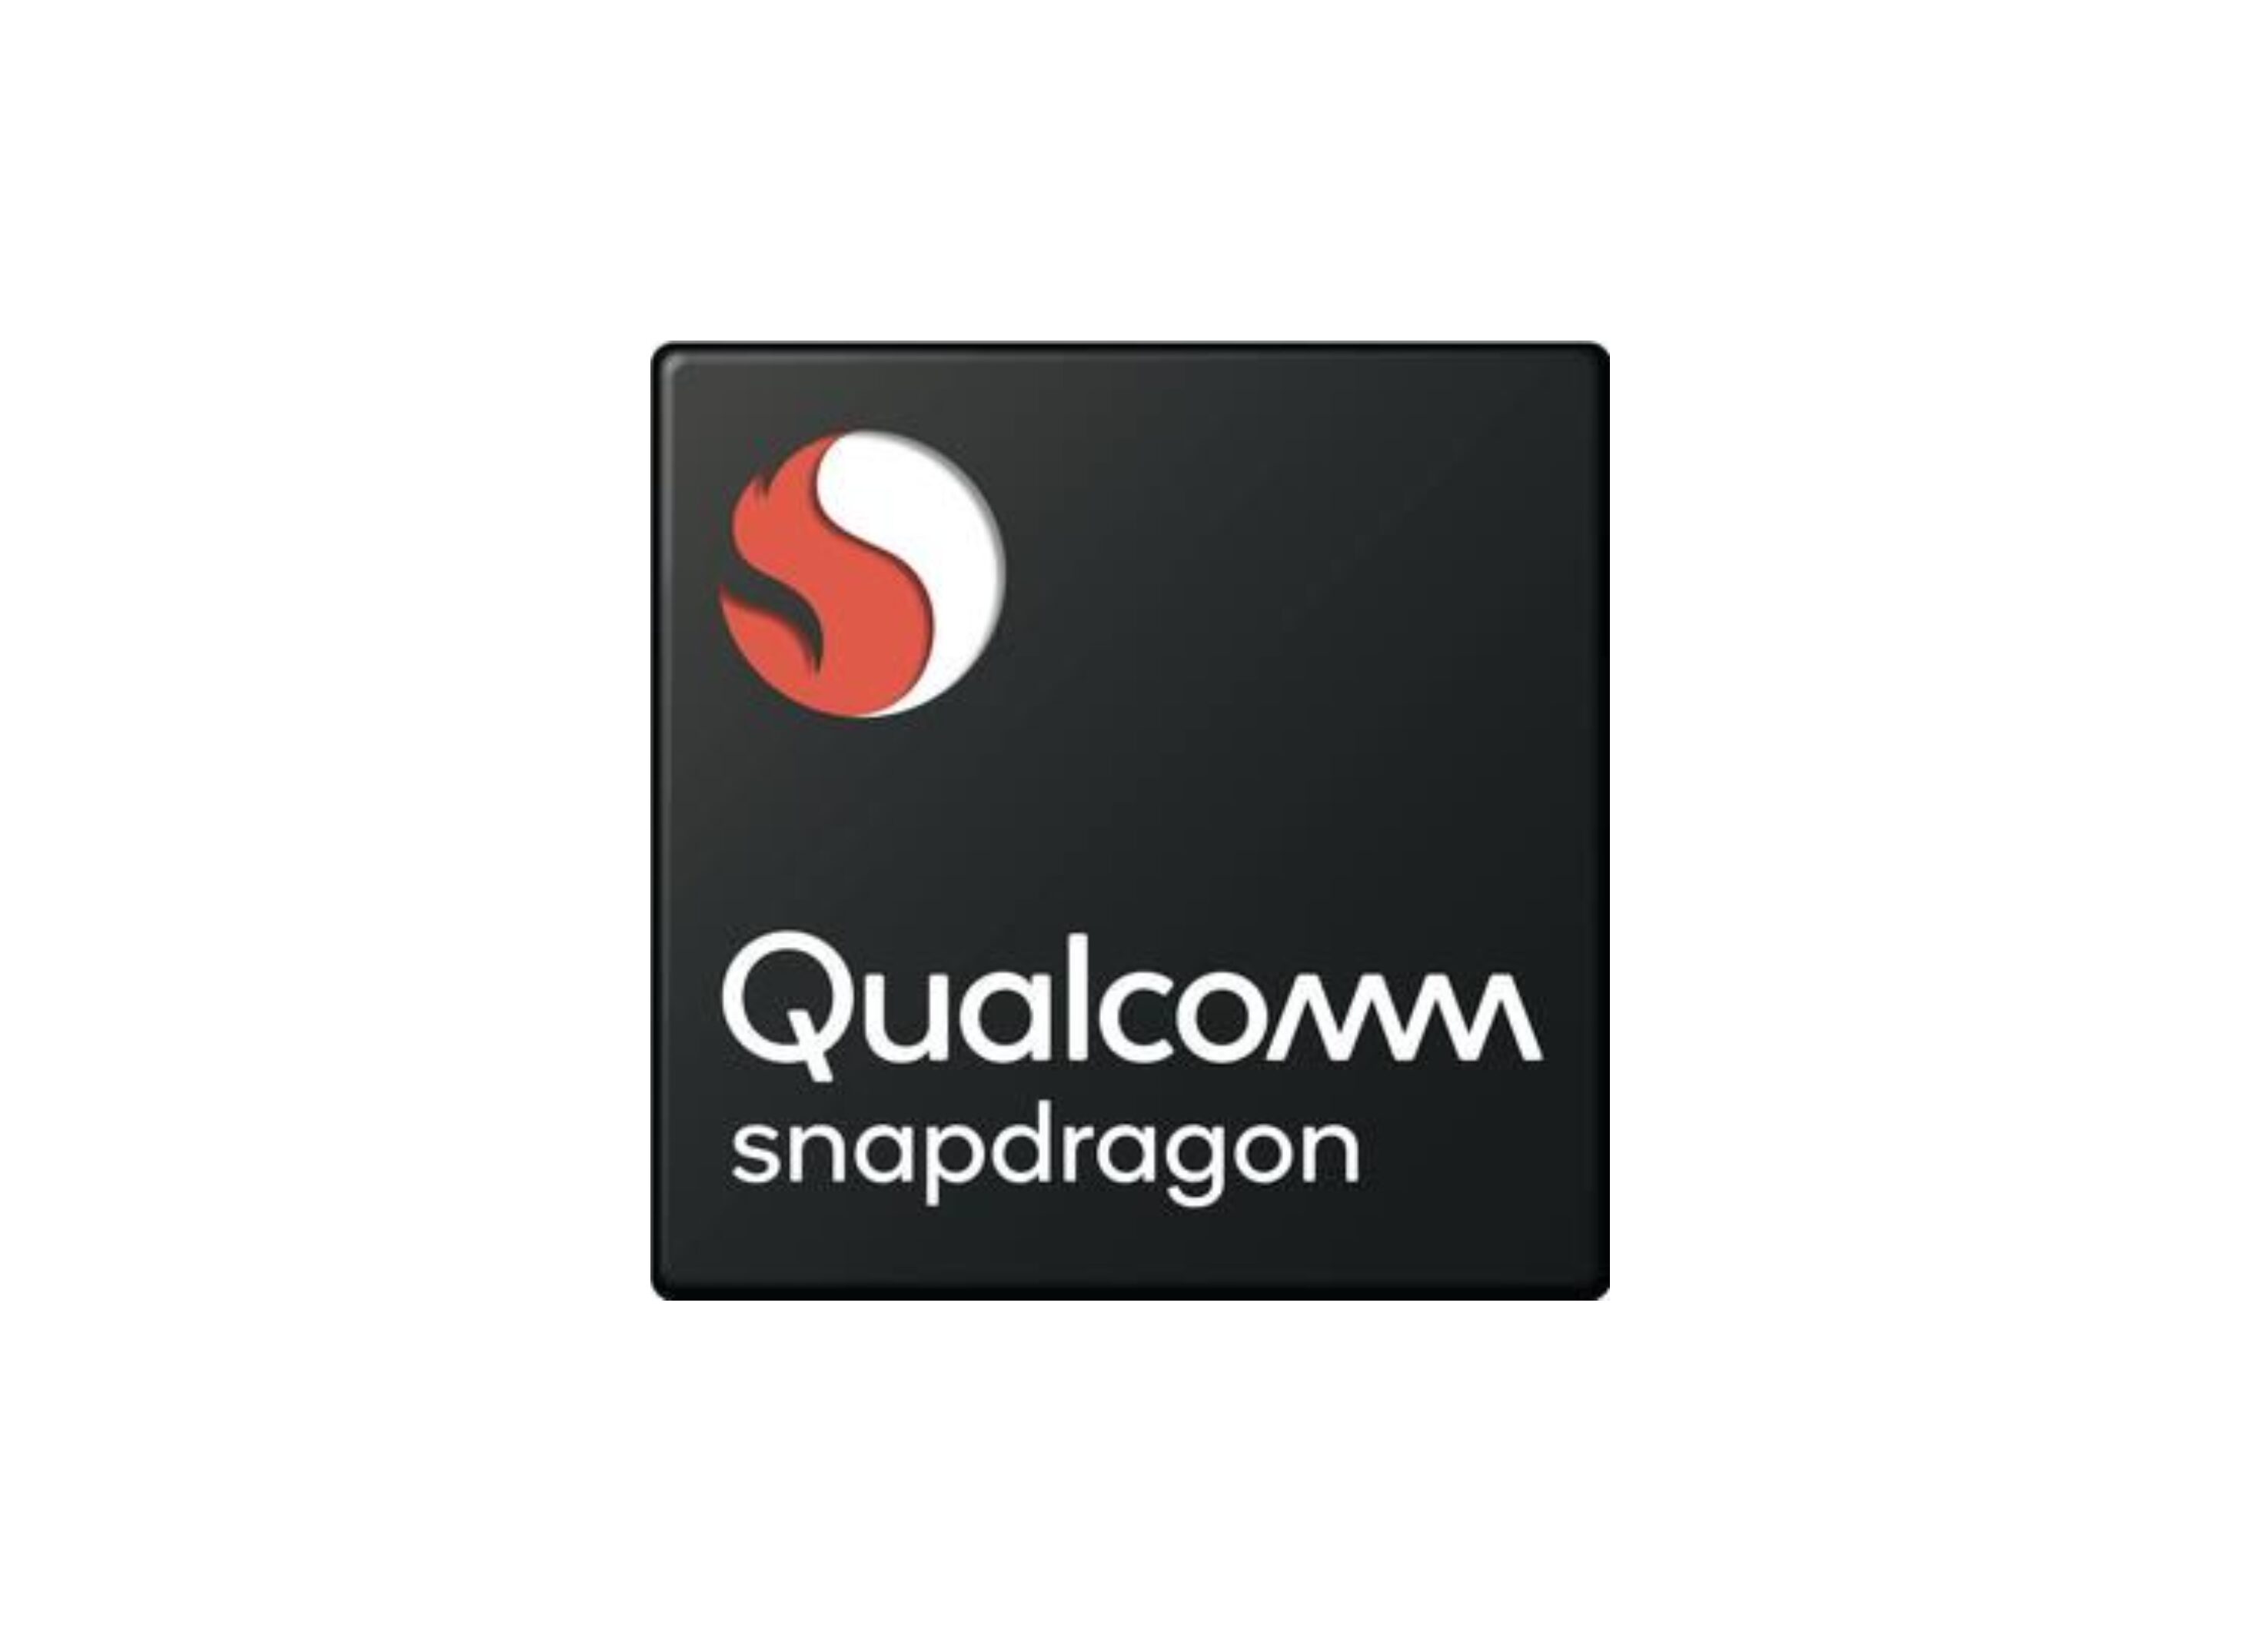 Qualcomm Snapdragon Logo Featured